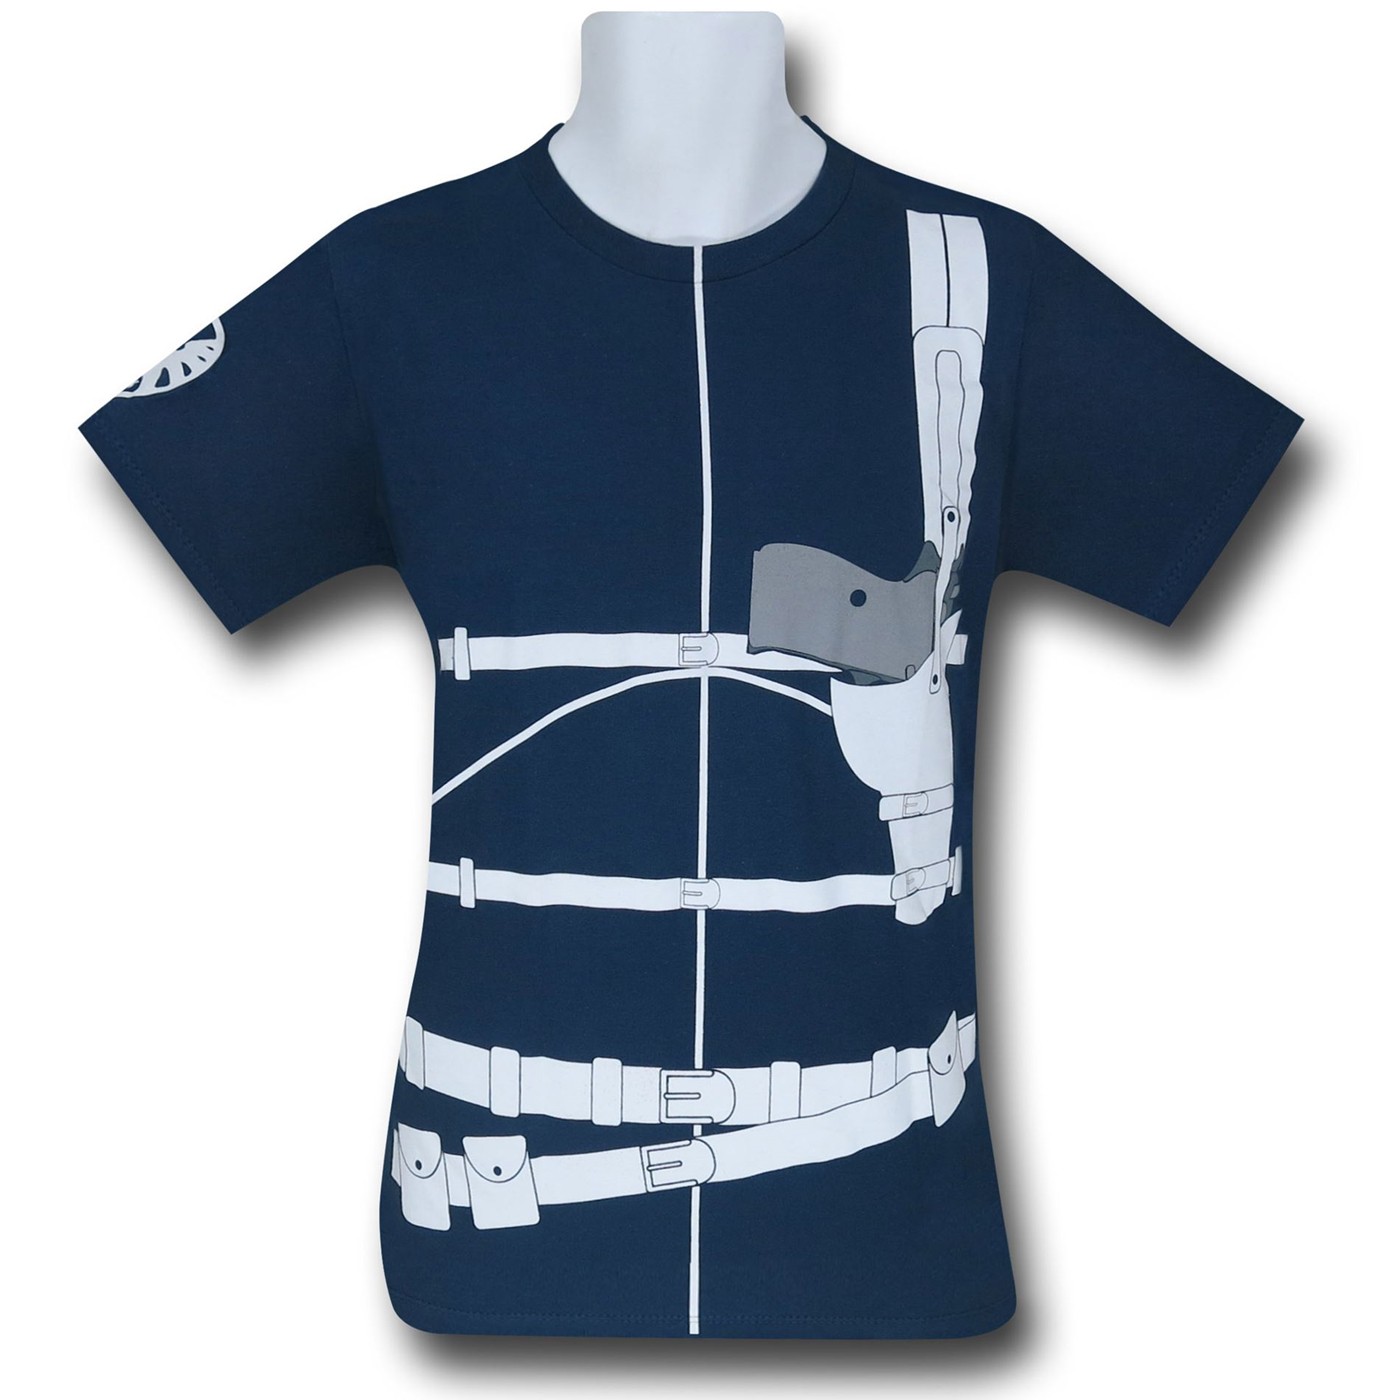 Nick Fury Armed Costume Navy T-Shirt